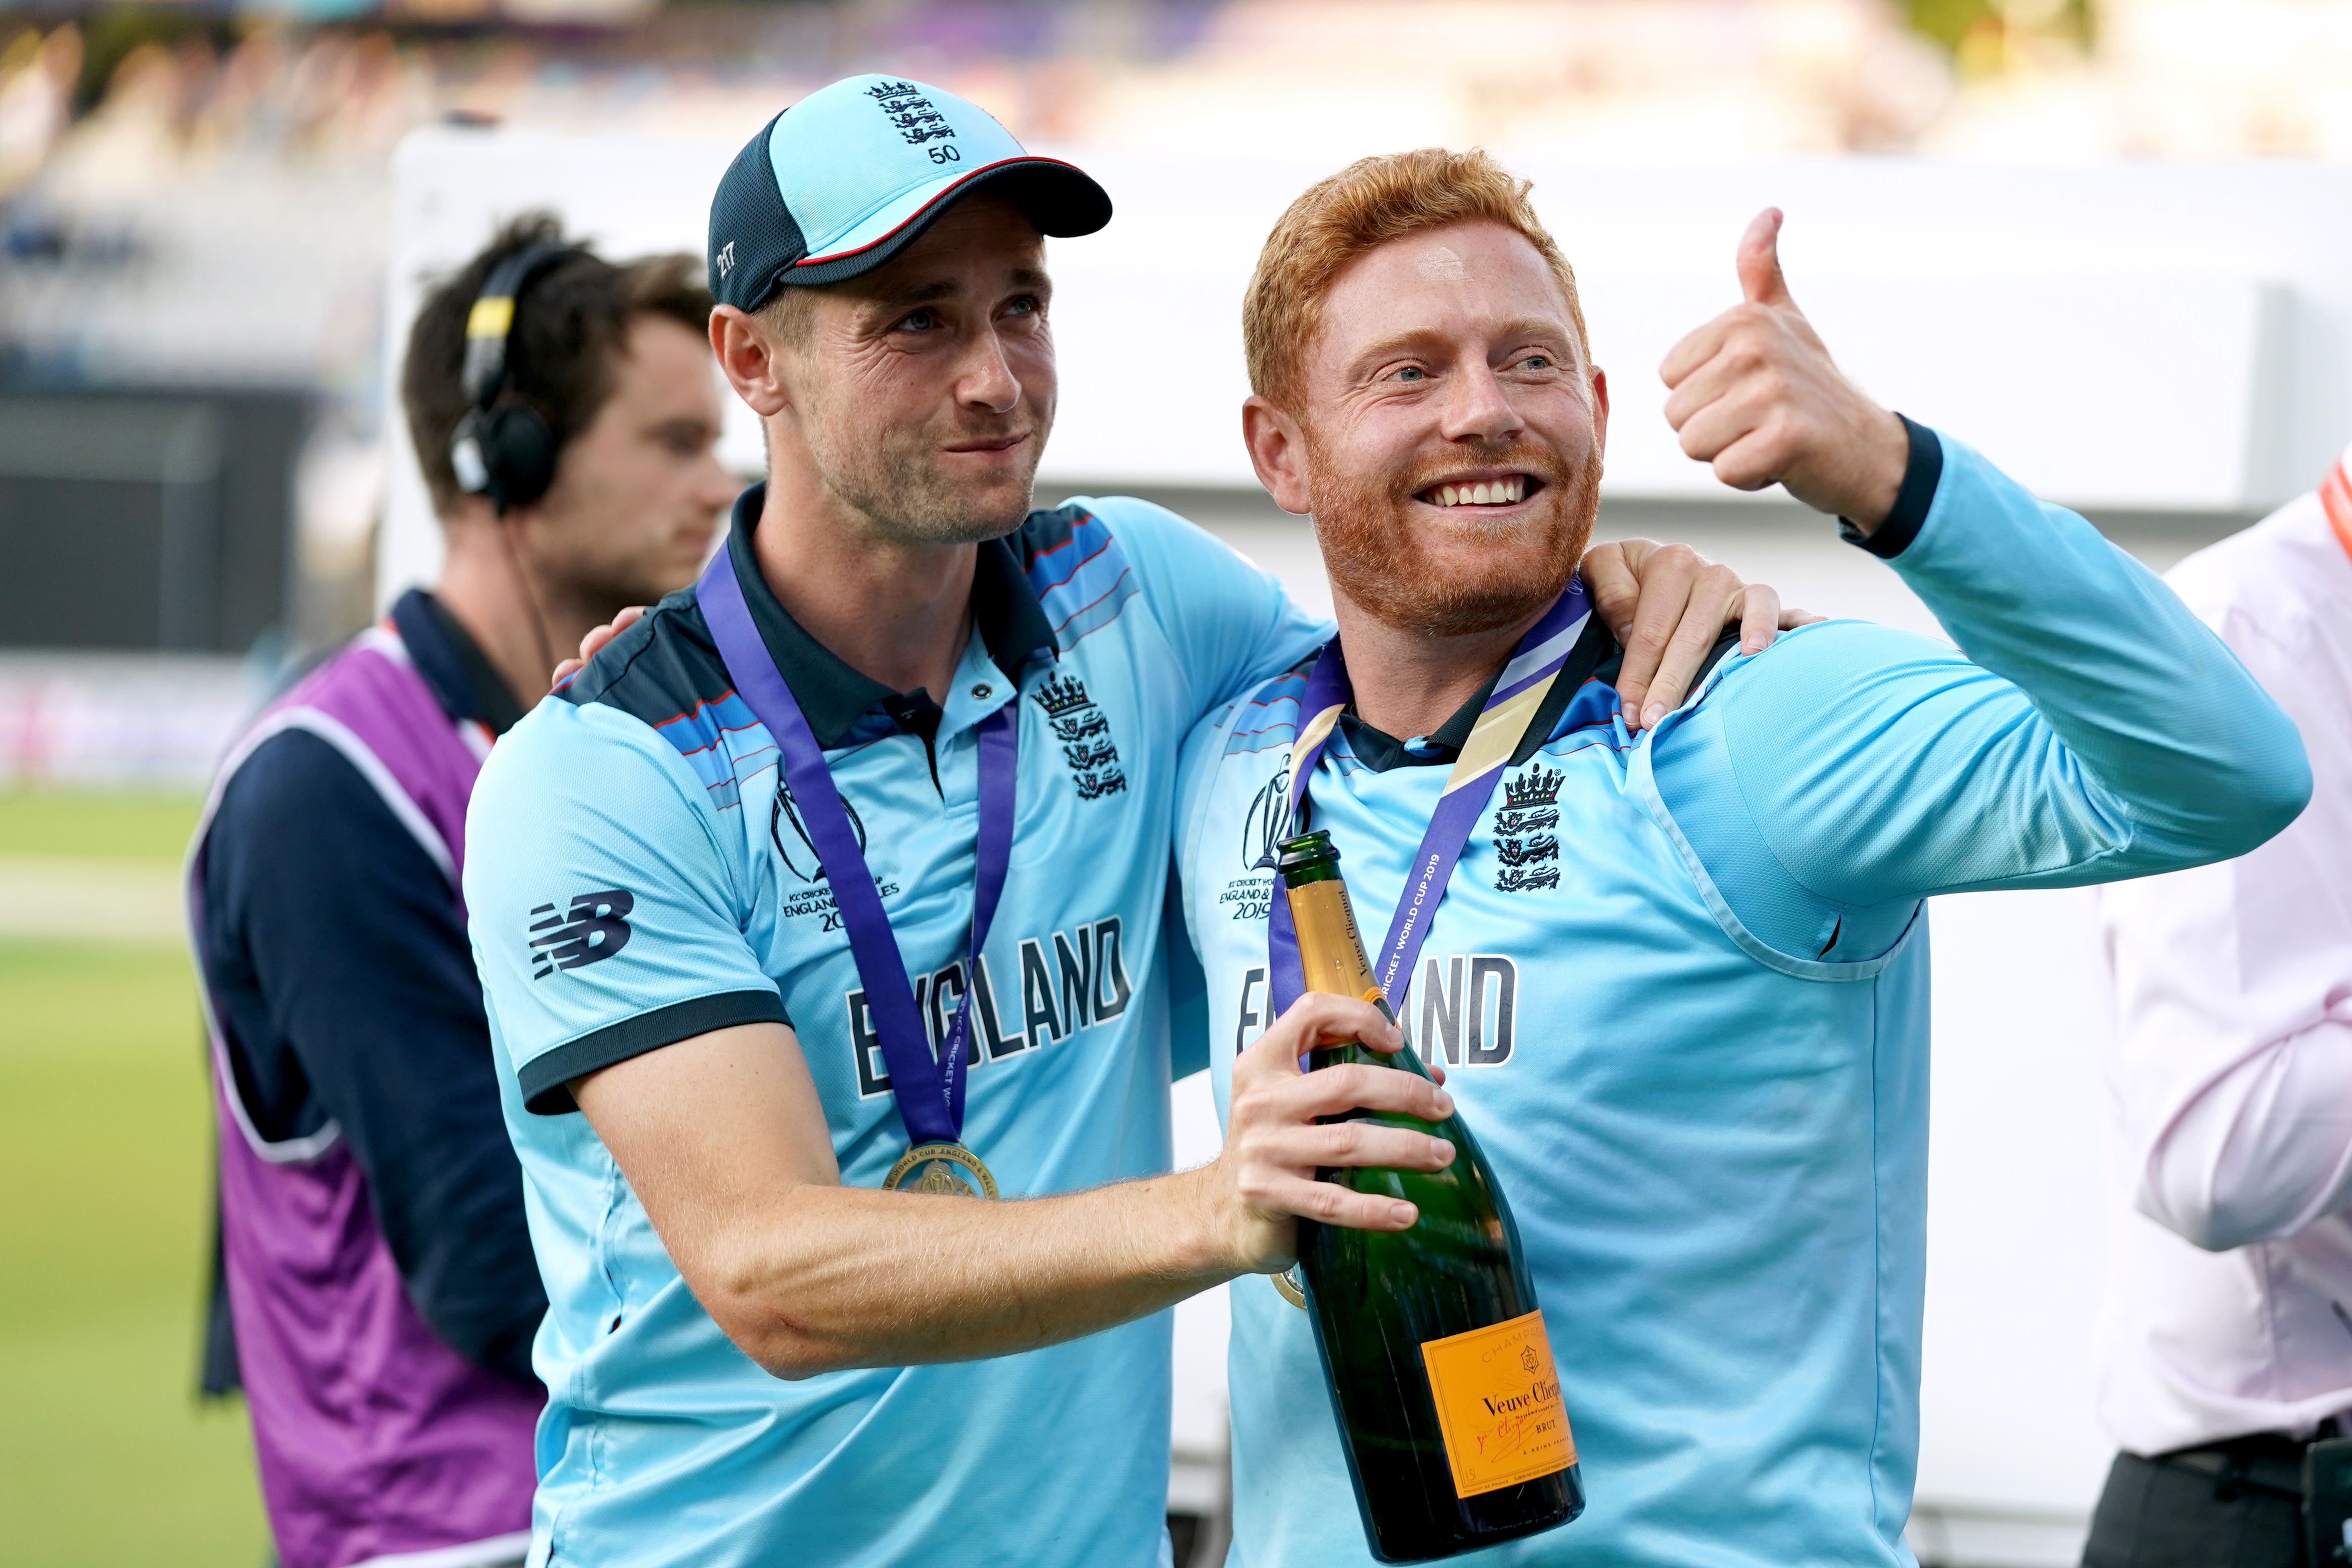 Chris Woakes and Jonny Bairstow starred in England’s 2019 title win (John Walton/PA)